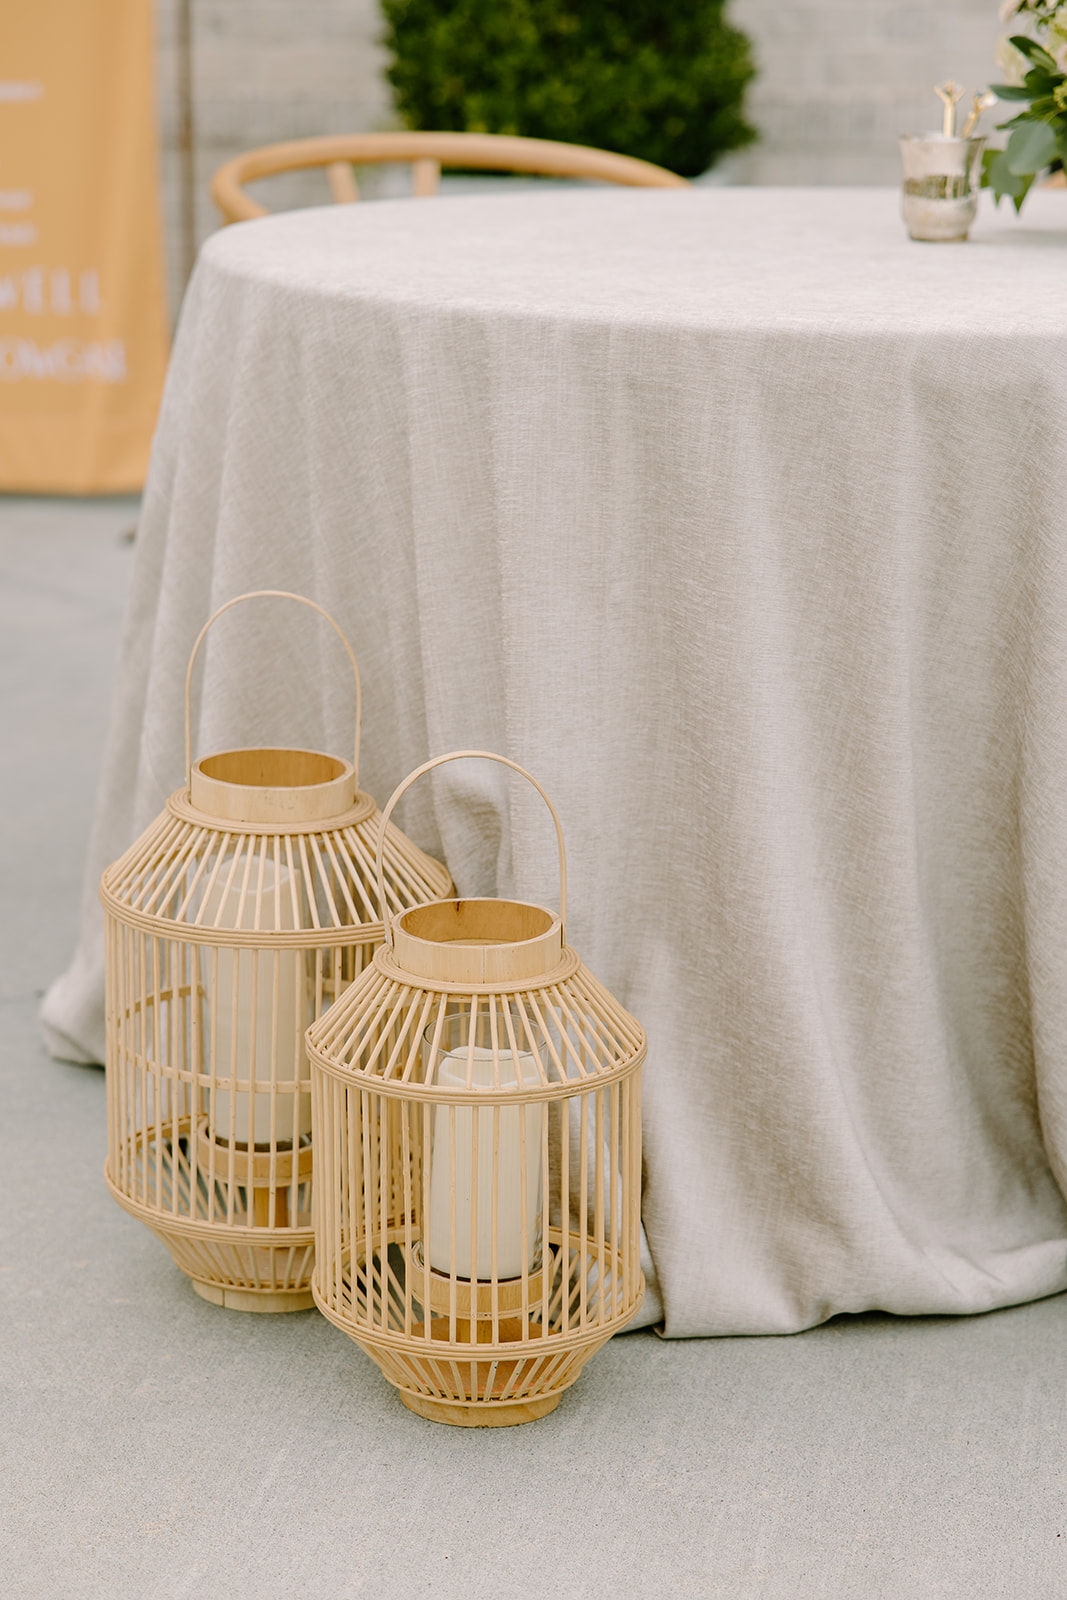 Summer wedding decor with rattan lanterns captured by Raleigh wedding photographers